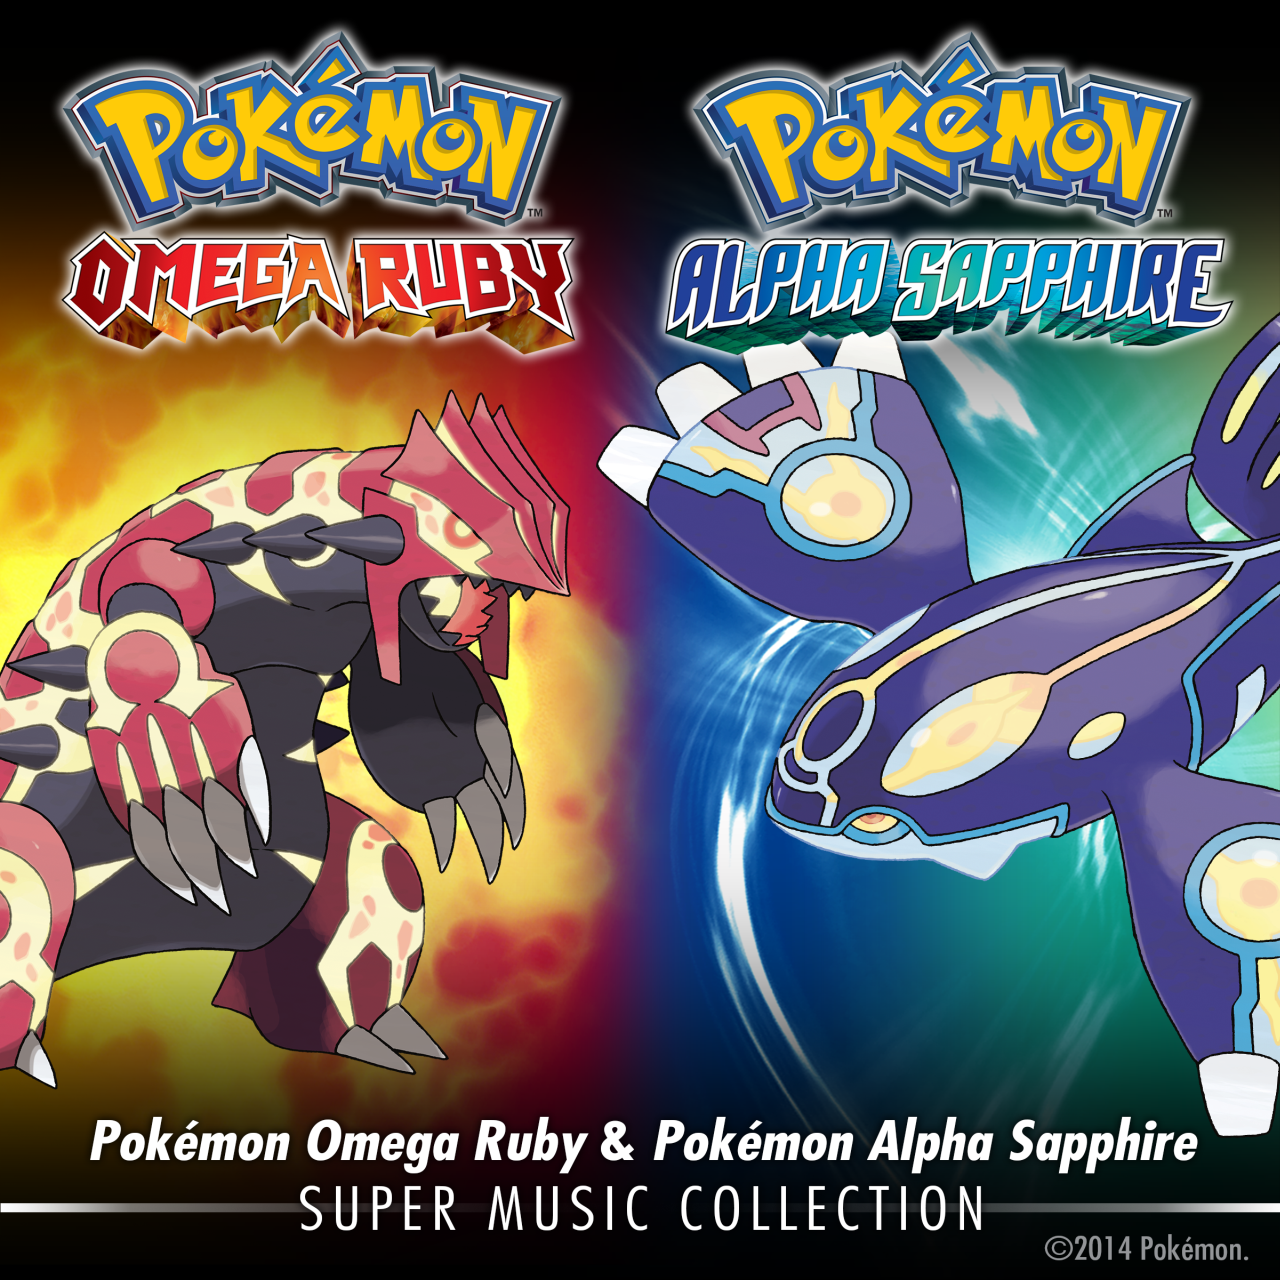 Drawn Technology on X: Model sheets from Pokémon Omega Ruby/Alpha Saphire:  Pokedex GBA/GBA SP Game Freak, 2014    / X